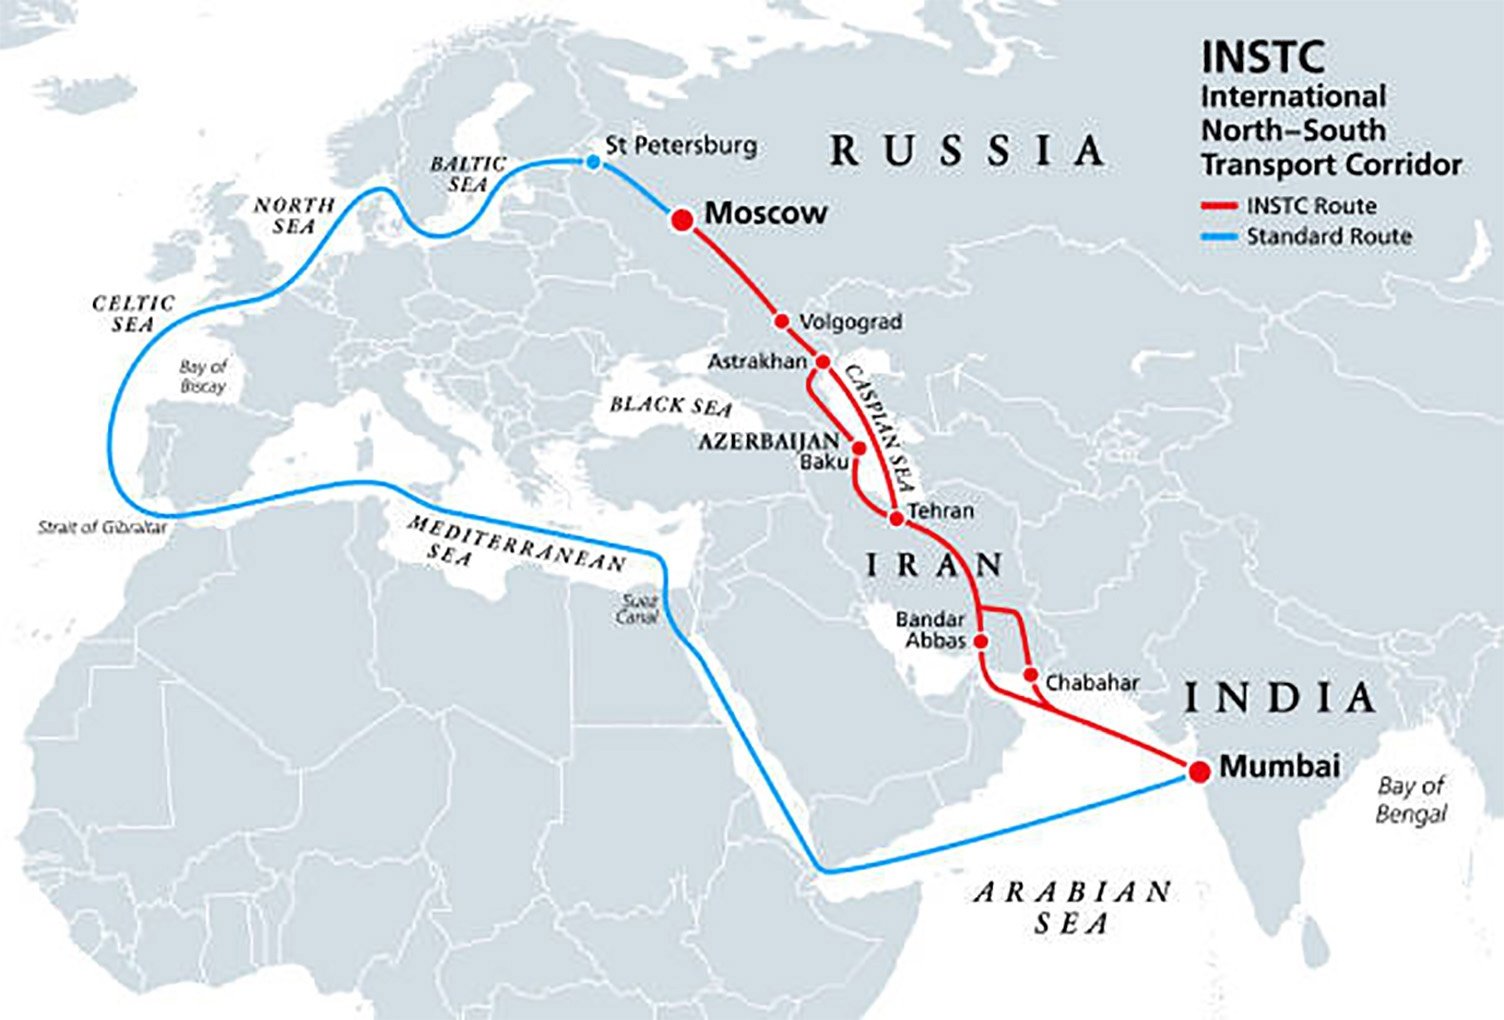 INSTC: A Multi-model Project by India, Iran & Russia